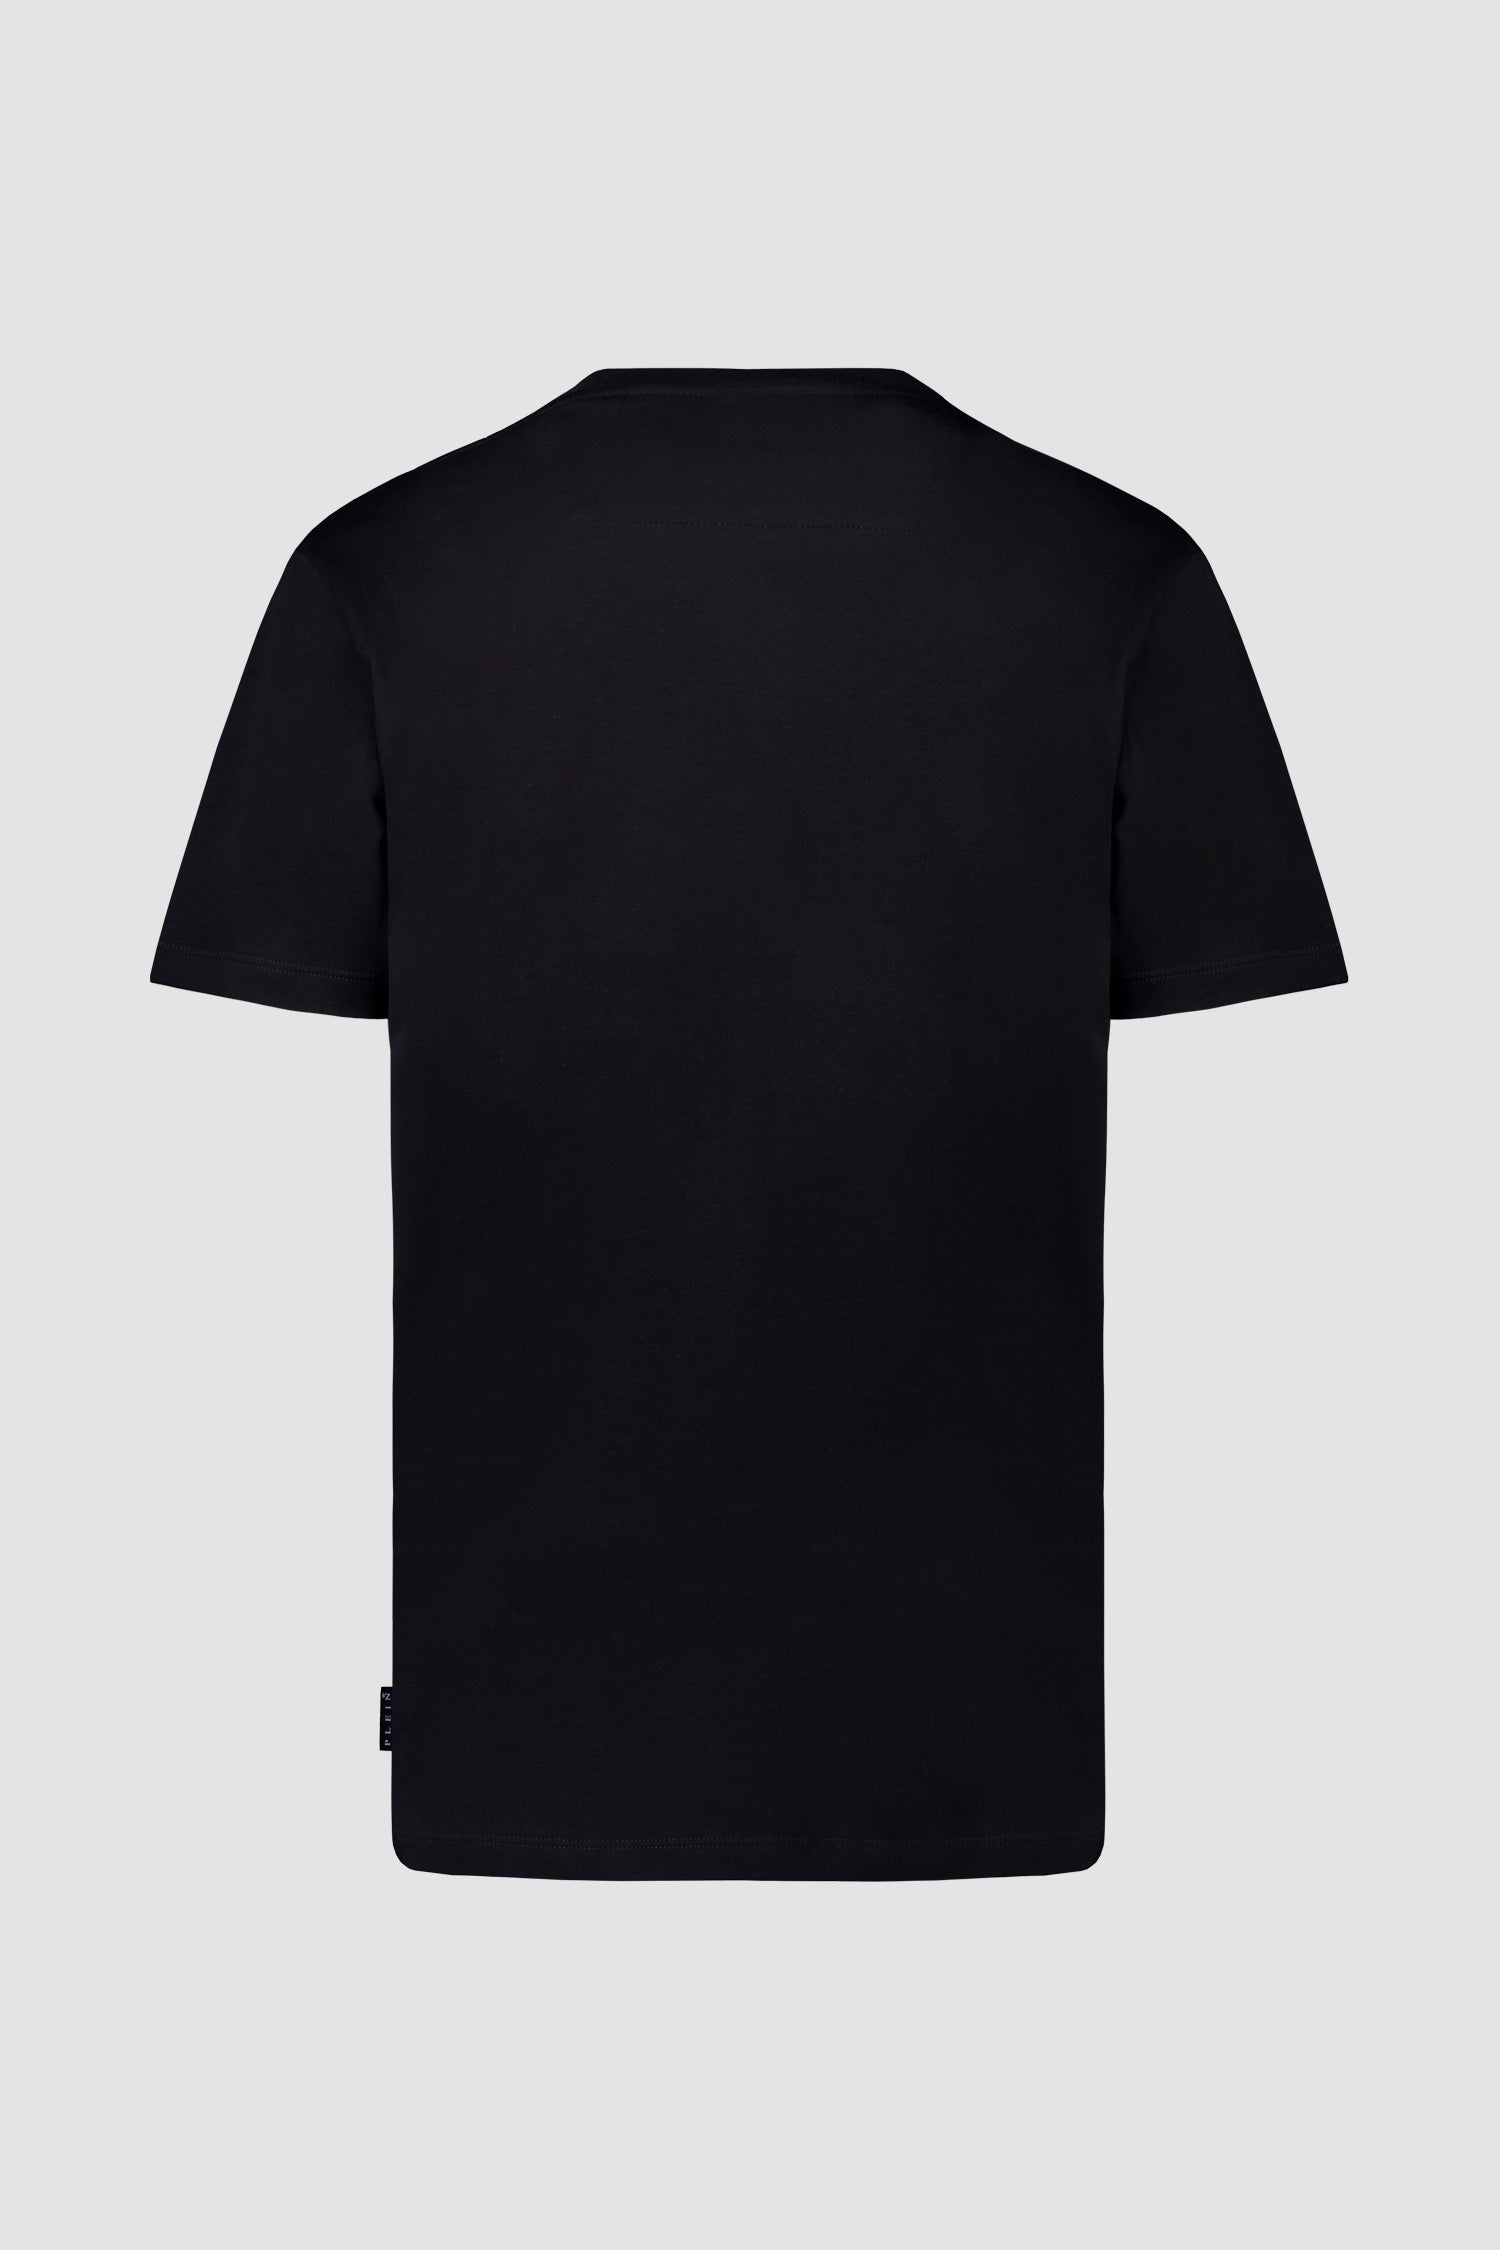 Fashion MENS Quality Single Round Neck T-shirt Black With Design